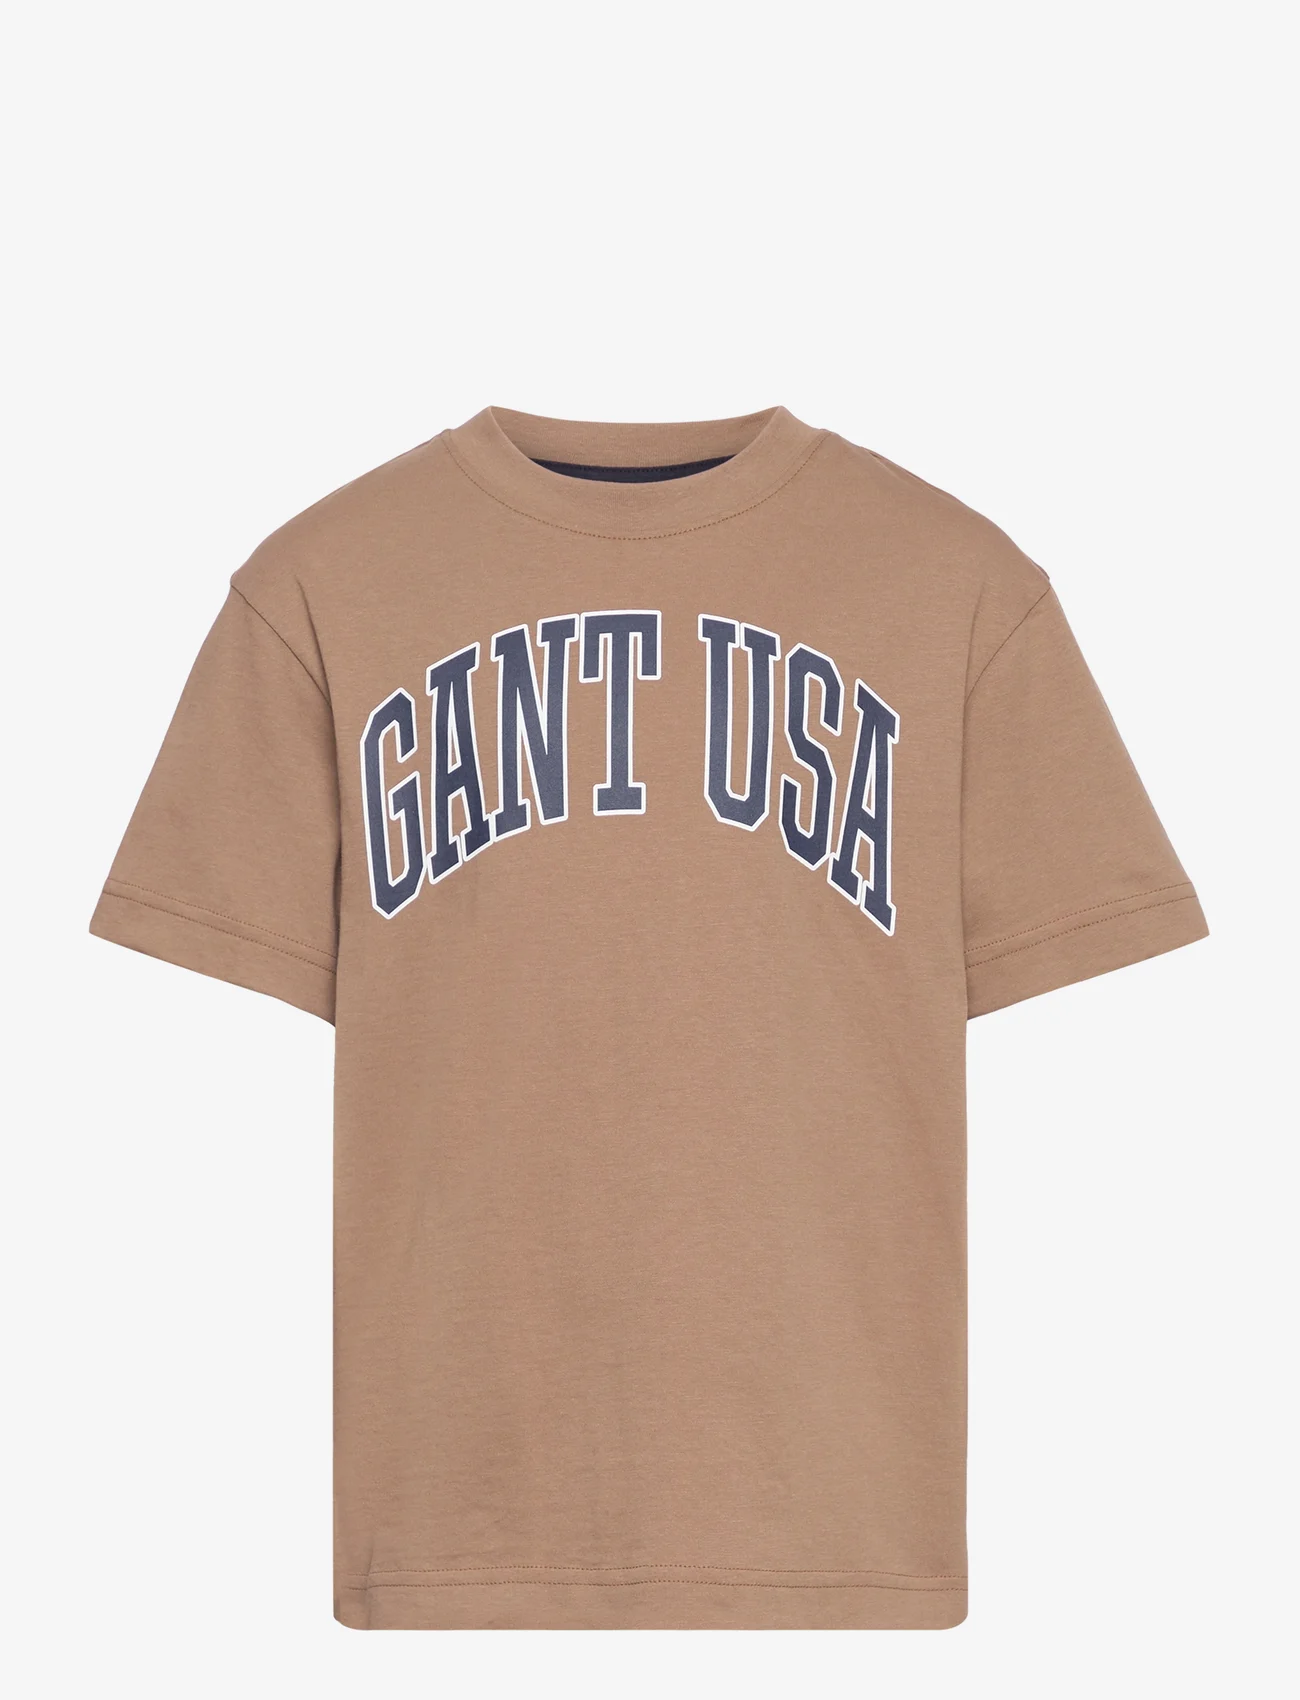 GANT - OVERSIZED GANT USA T-SHIRT - marškinėliai trumpomis rankovėmis - cocoa brown - 0